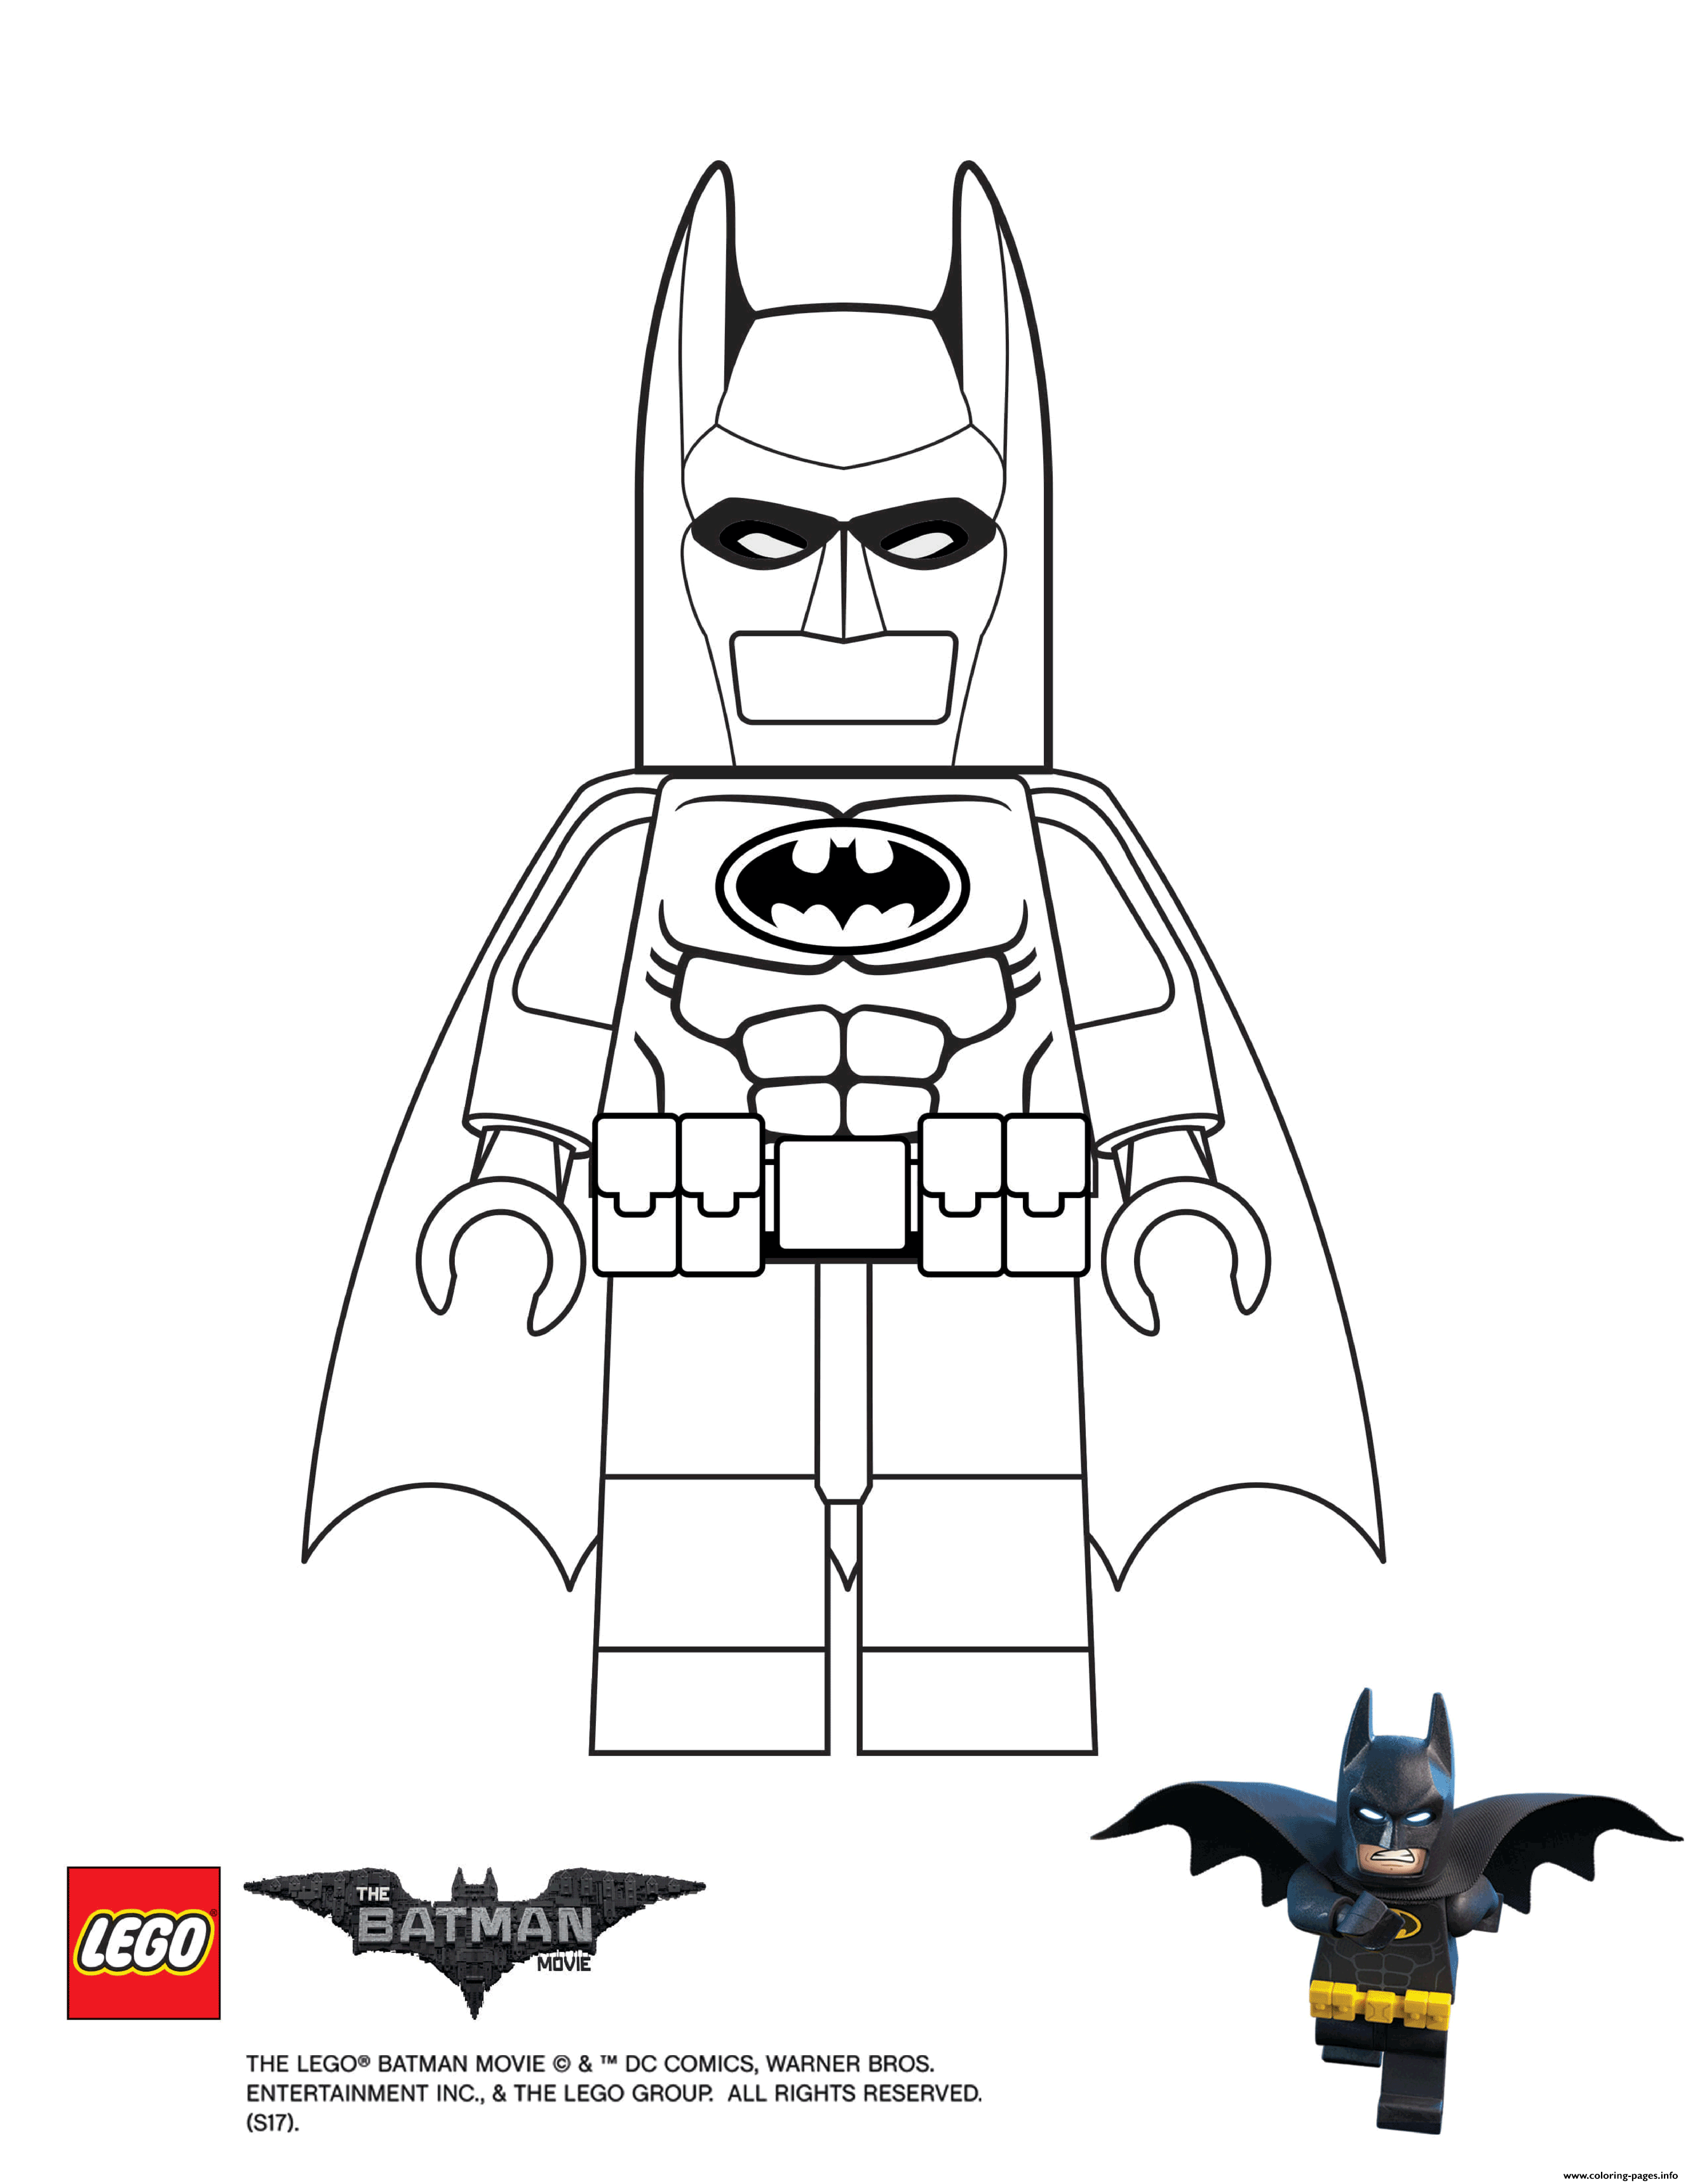 Batman Lego Batman Movie coloring